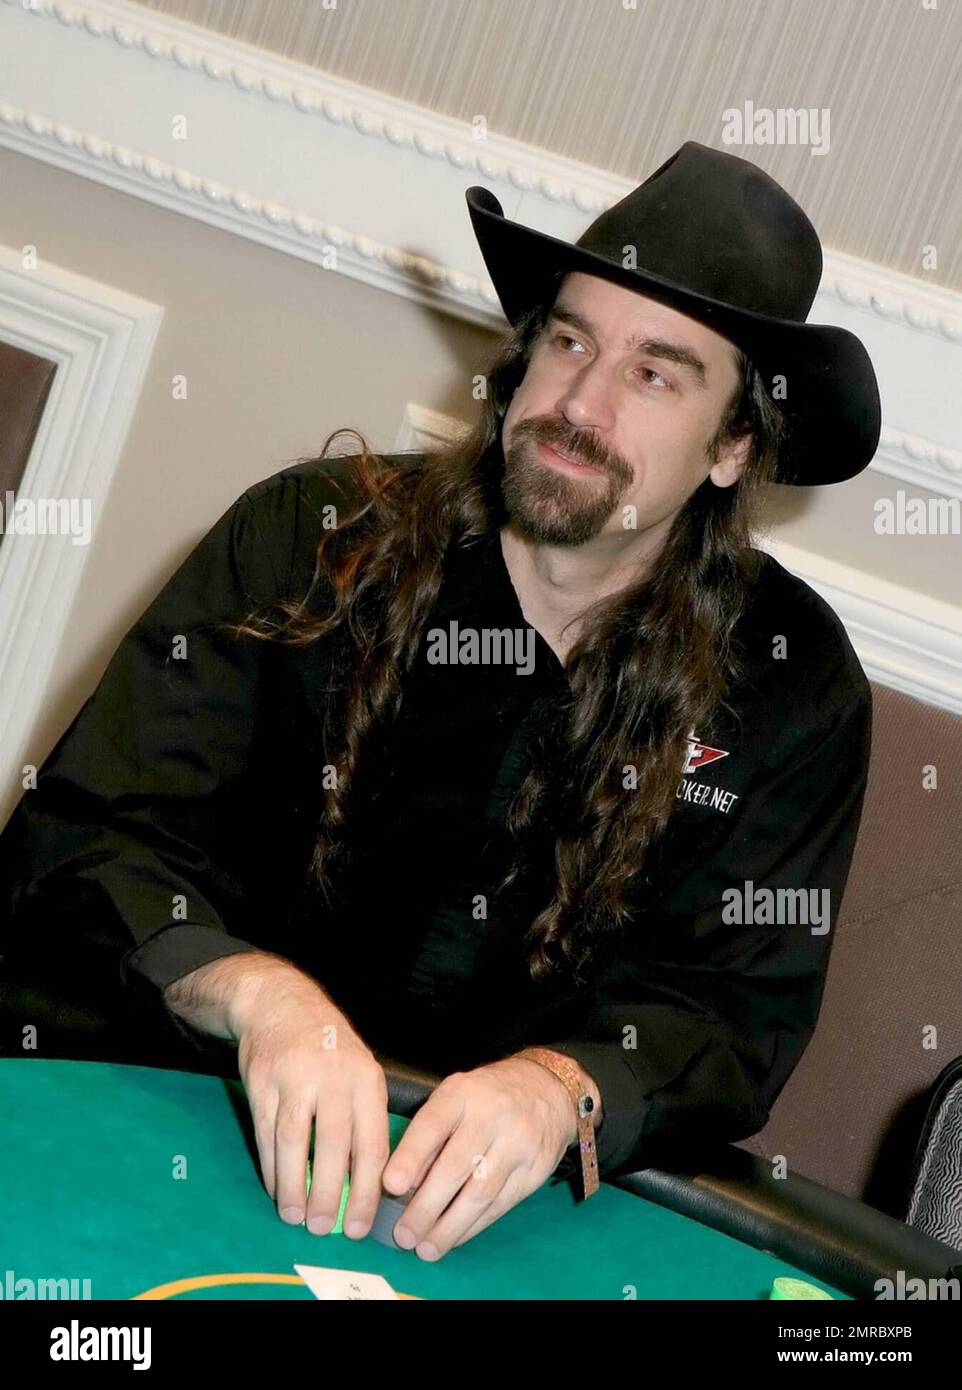 Chris ferguson poker hi-res stock photography and images - Alamy